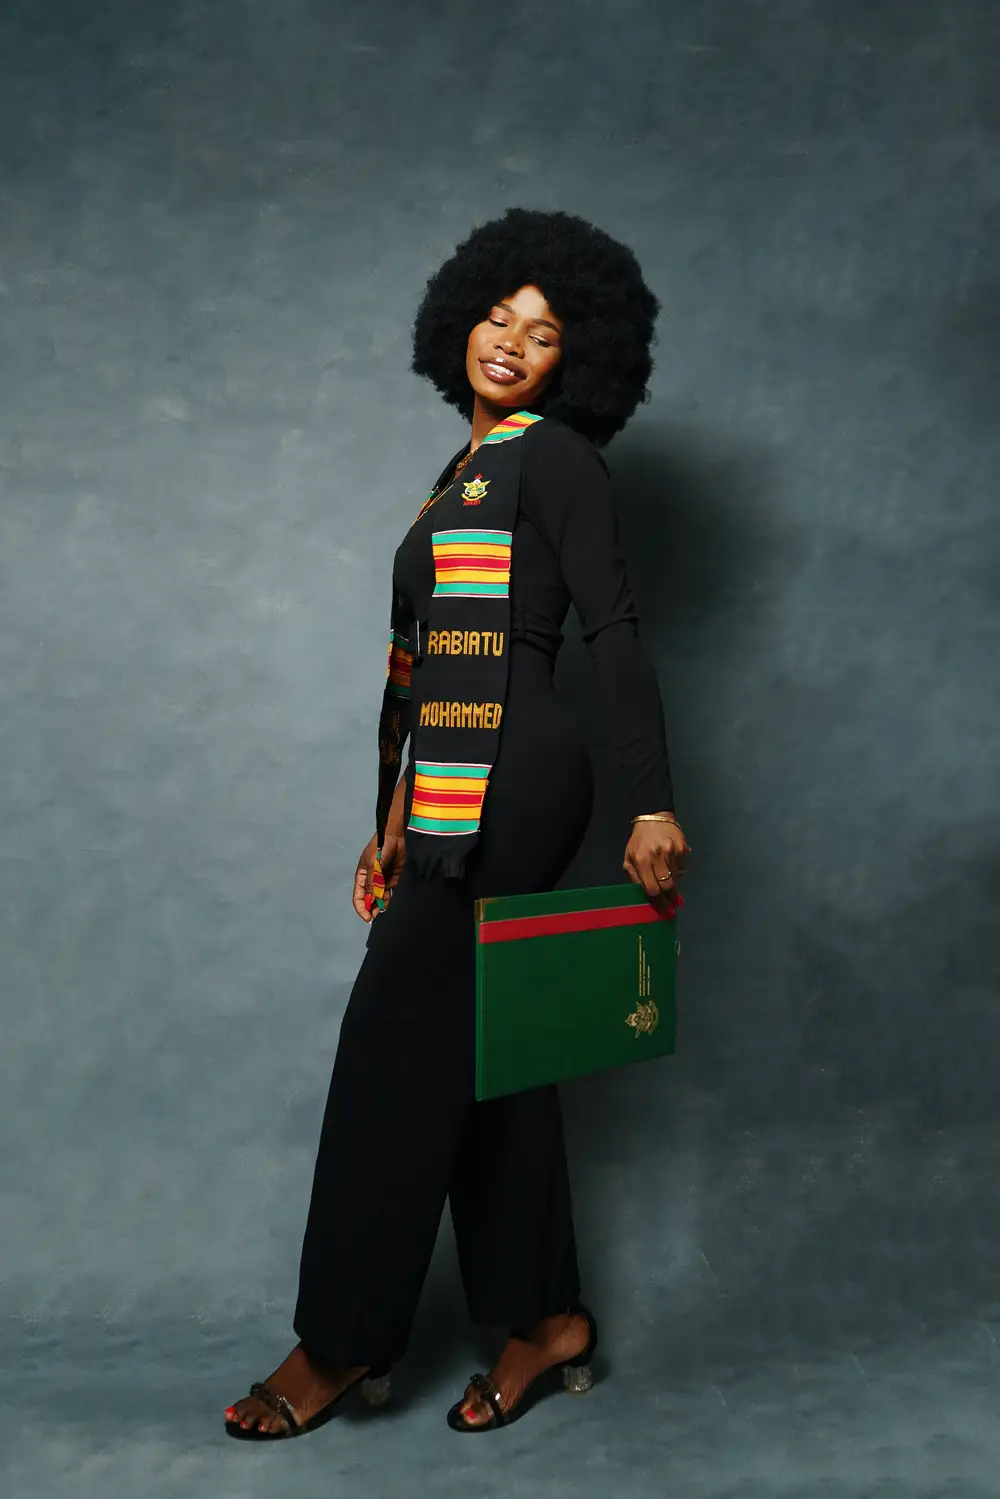 Graduating young woman